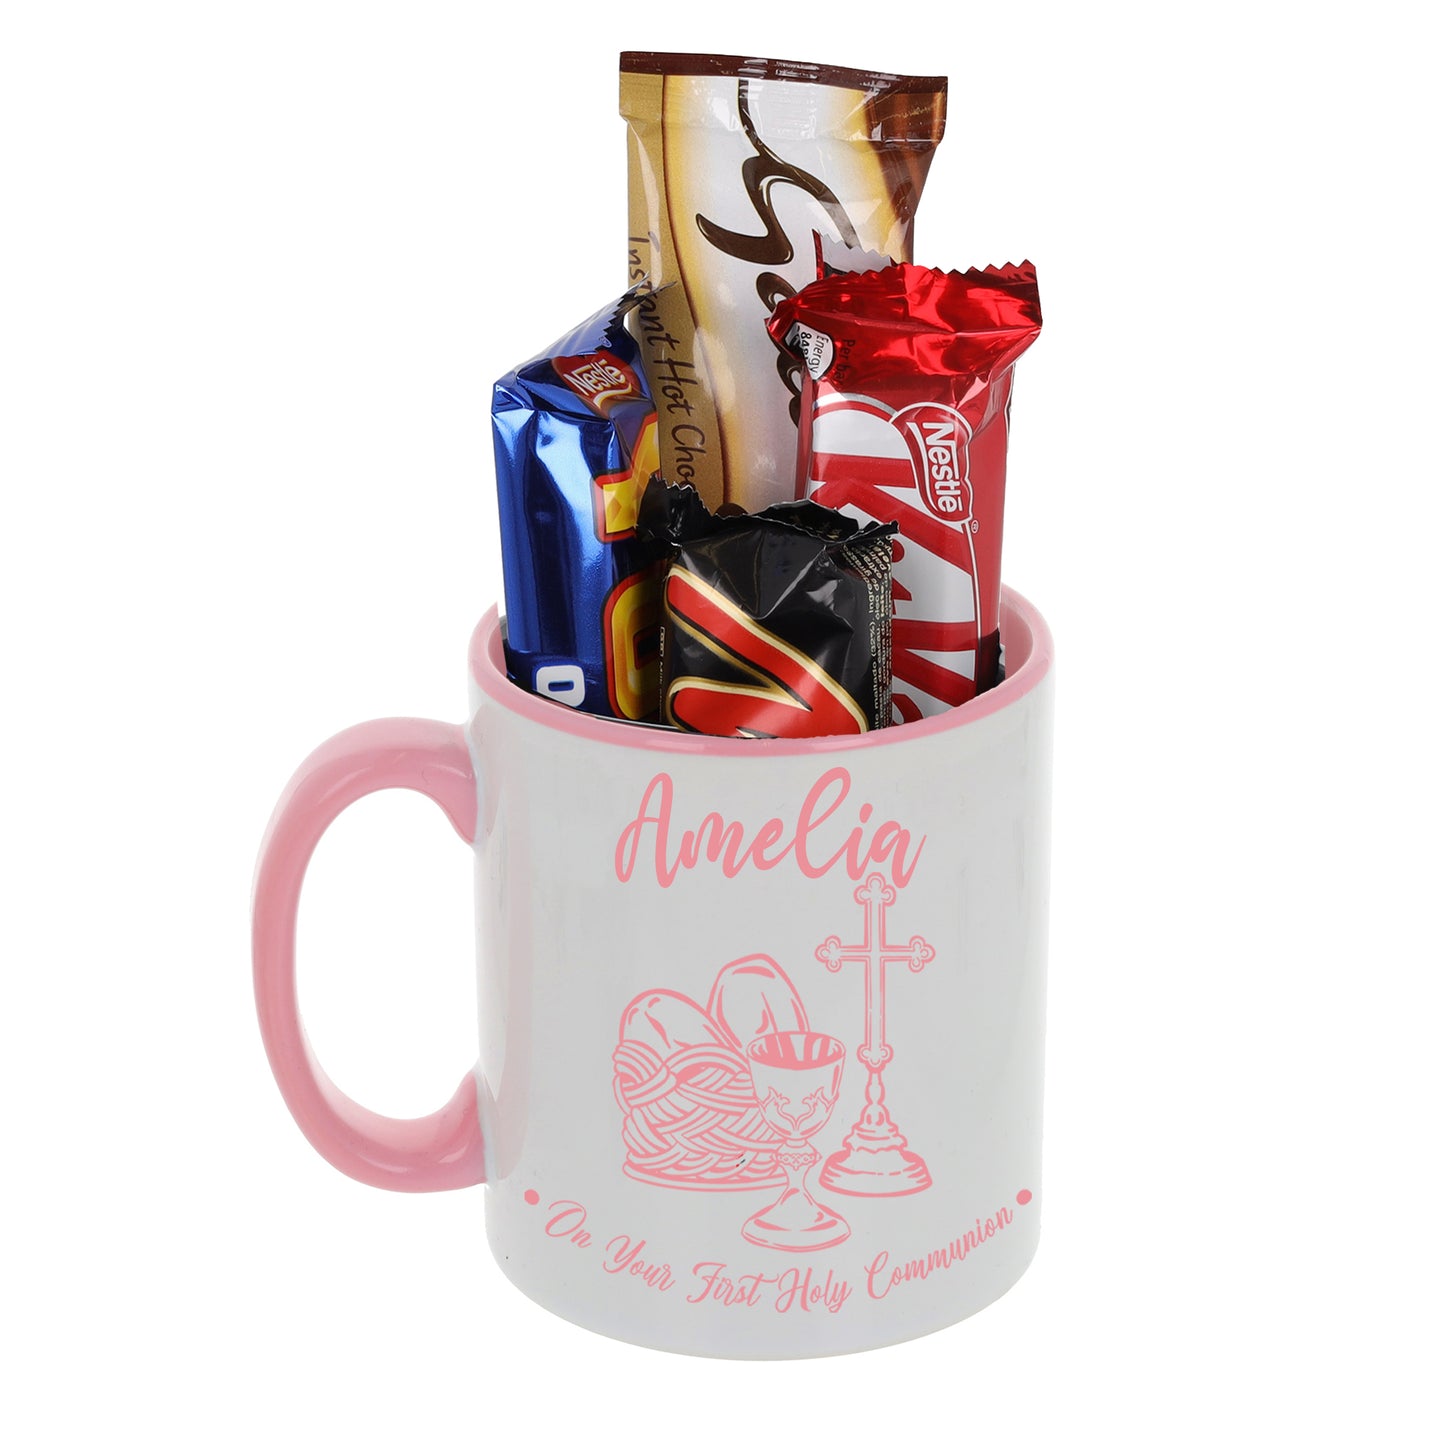 Personalised First Holy Communion Mug & Coaster Set  - Always Looking Good -   